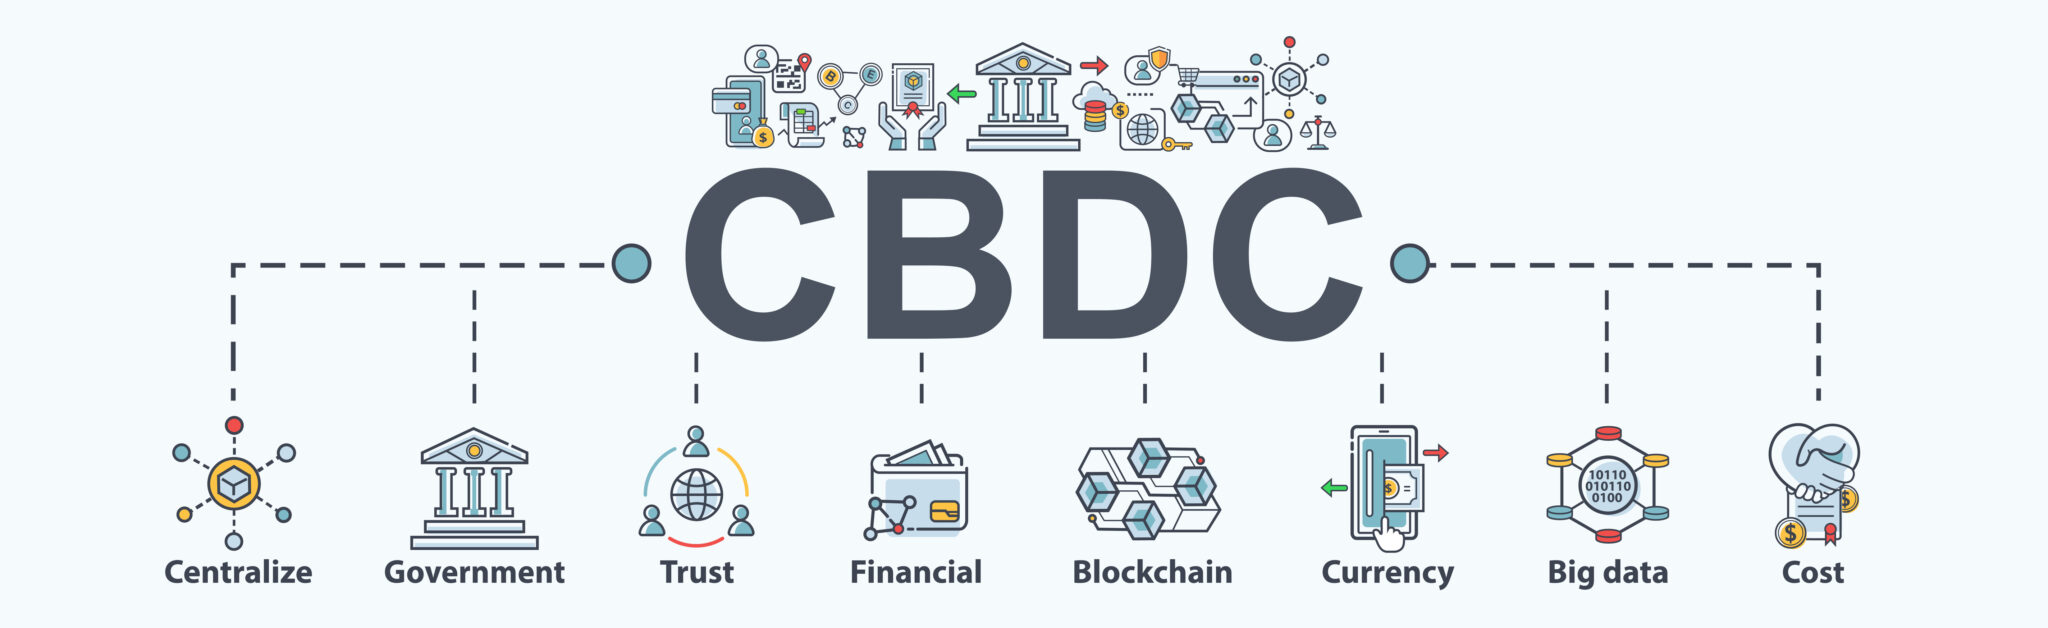 CBDC and Blockchain